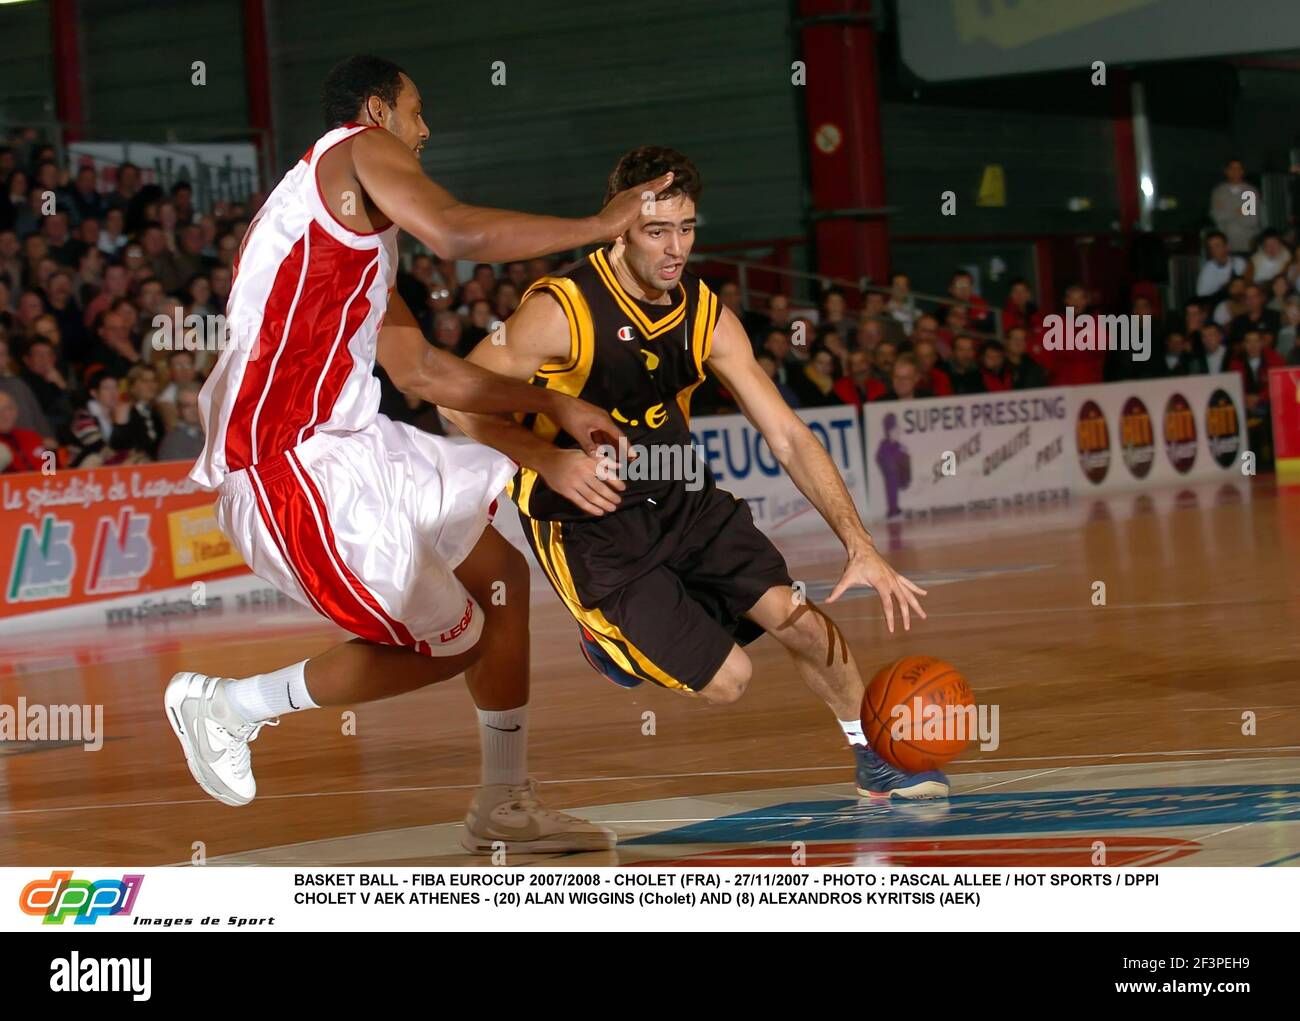 BASKET BALL - FIBA EUROCUP 2007/2008 - CHOLET (FRA) - 27/11/2007 - PHOTO :  PASCAL ALLEE / HOT SPORTS / DPPI CHOLET V AEK ATHENES - (20) ALAN WIGGINS  (Cholet) AND (8) ALEXANDROS KYRITSIS (AEK Stock Photo - Alamy